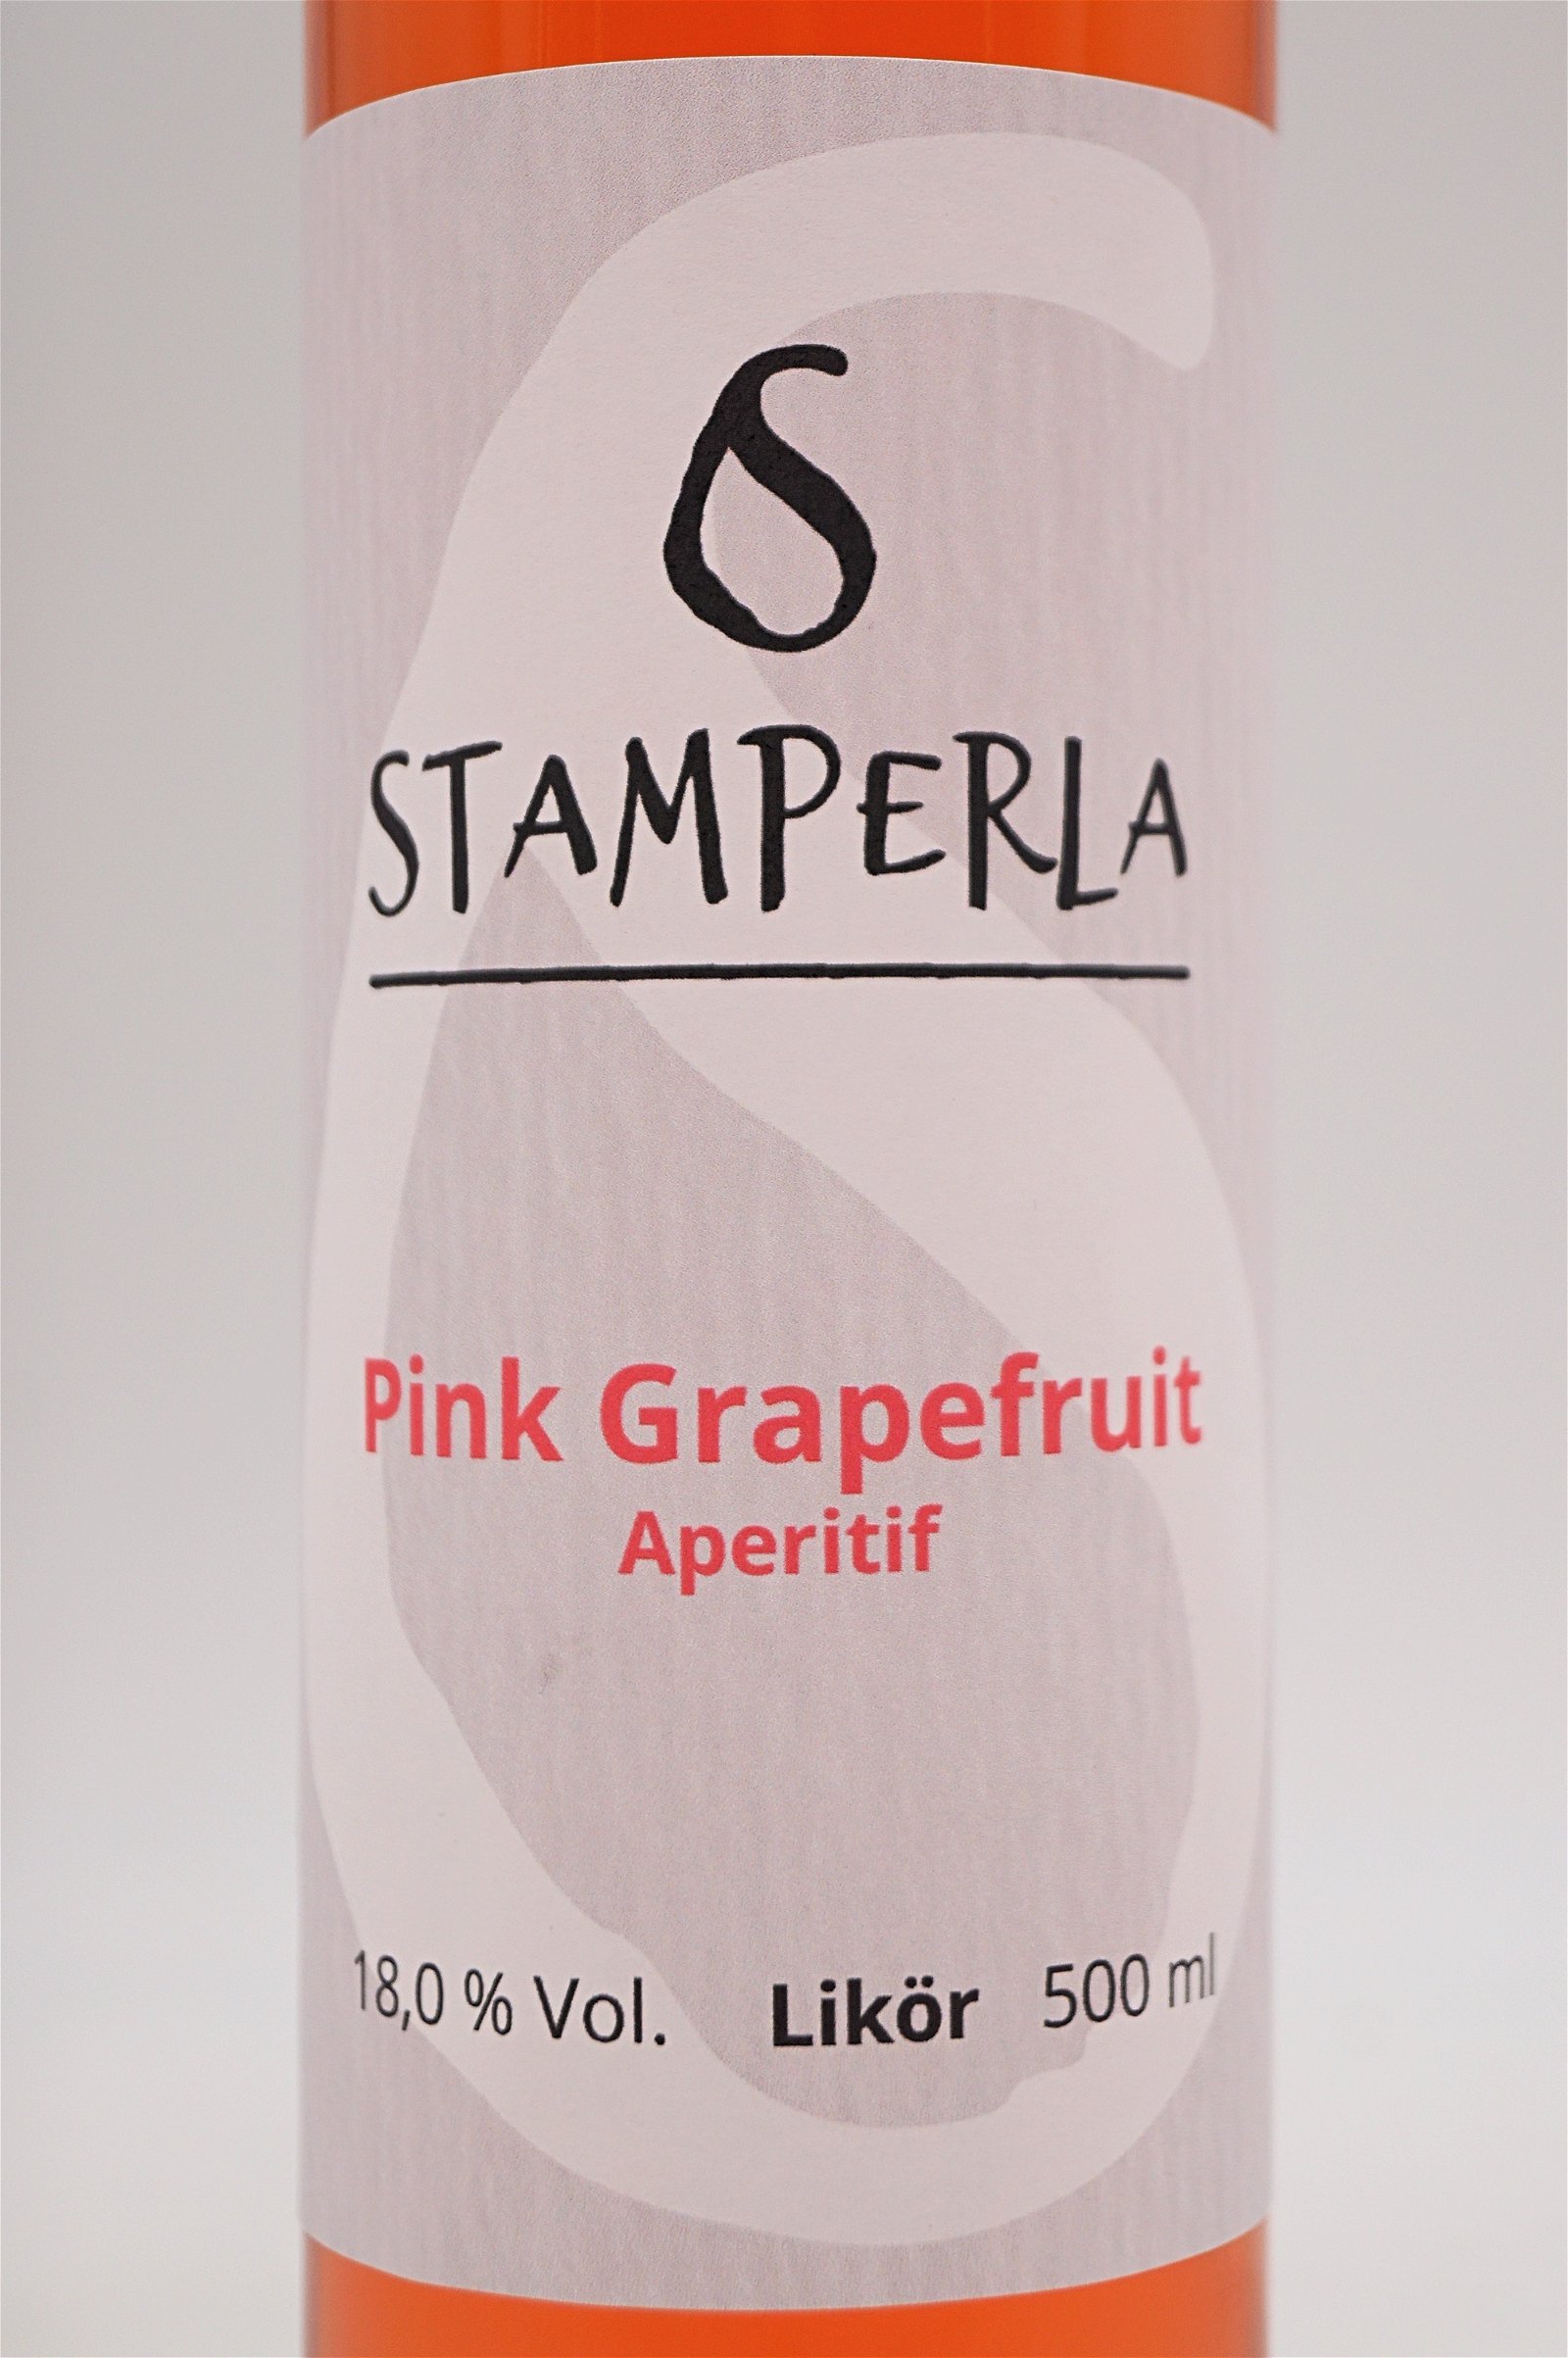 Stamperla Pink Grapefruit Aperitif